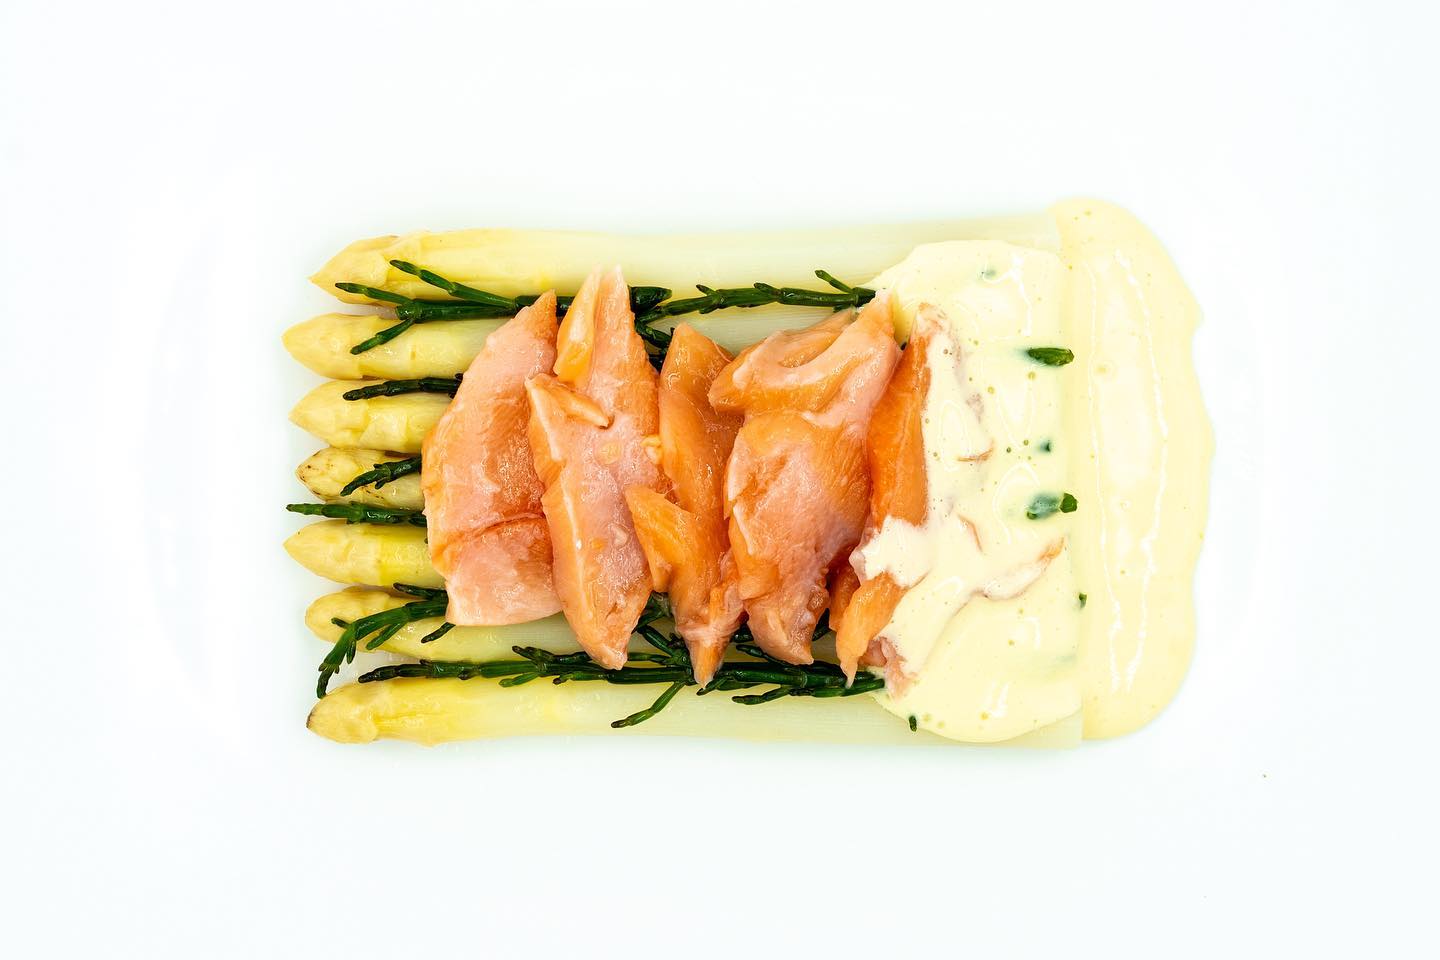 Asperges met zalm en zeekraal #foodporn #instafood #asperges #asparagus #zalm #salmon #zeekraal #sousvide #thermomix